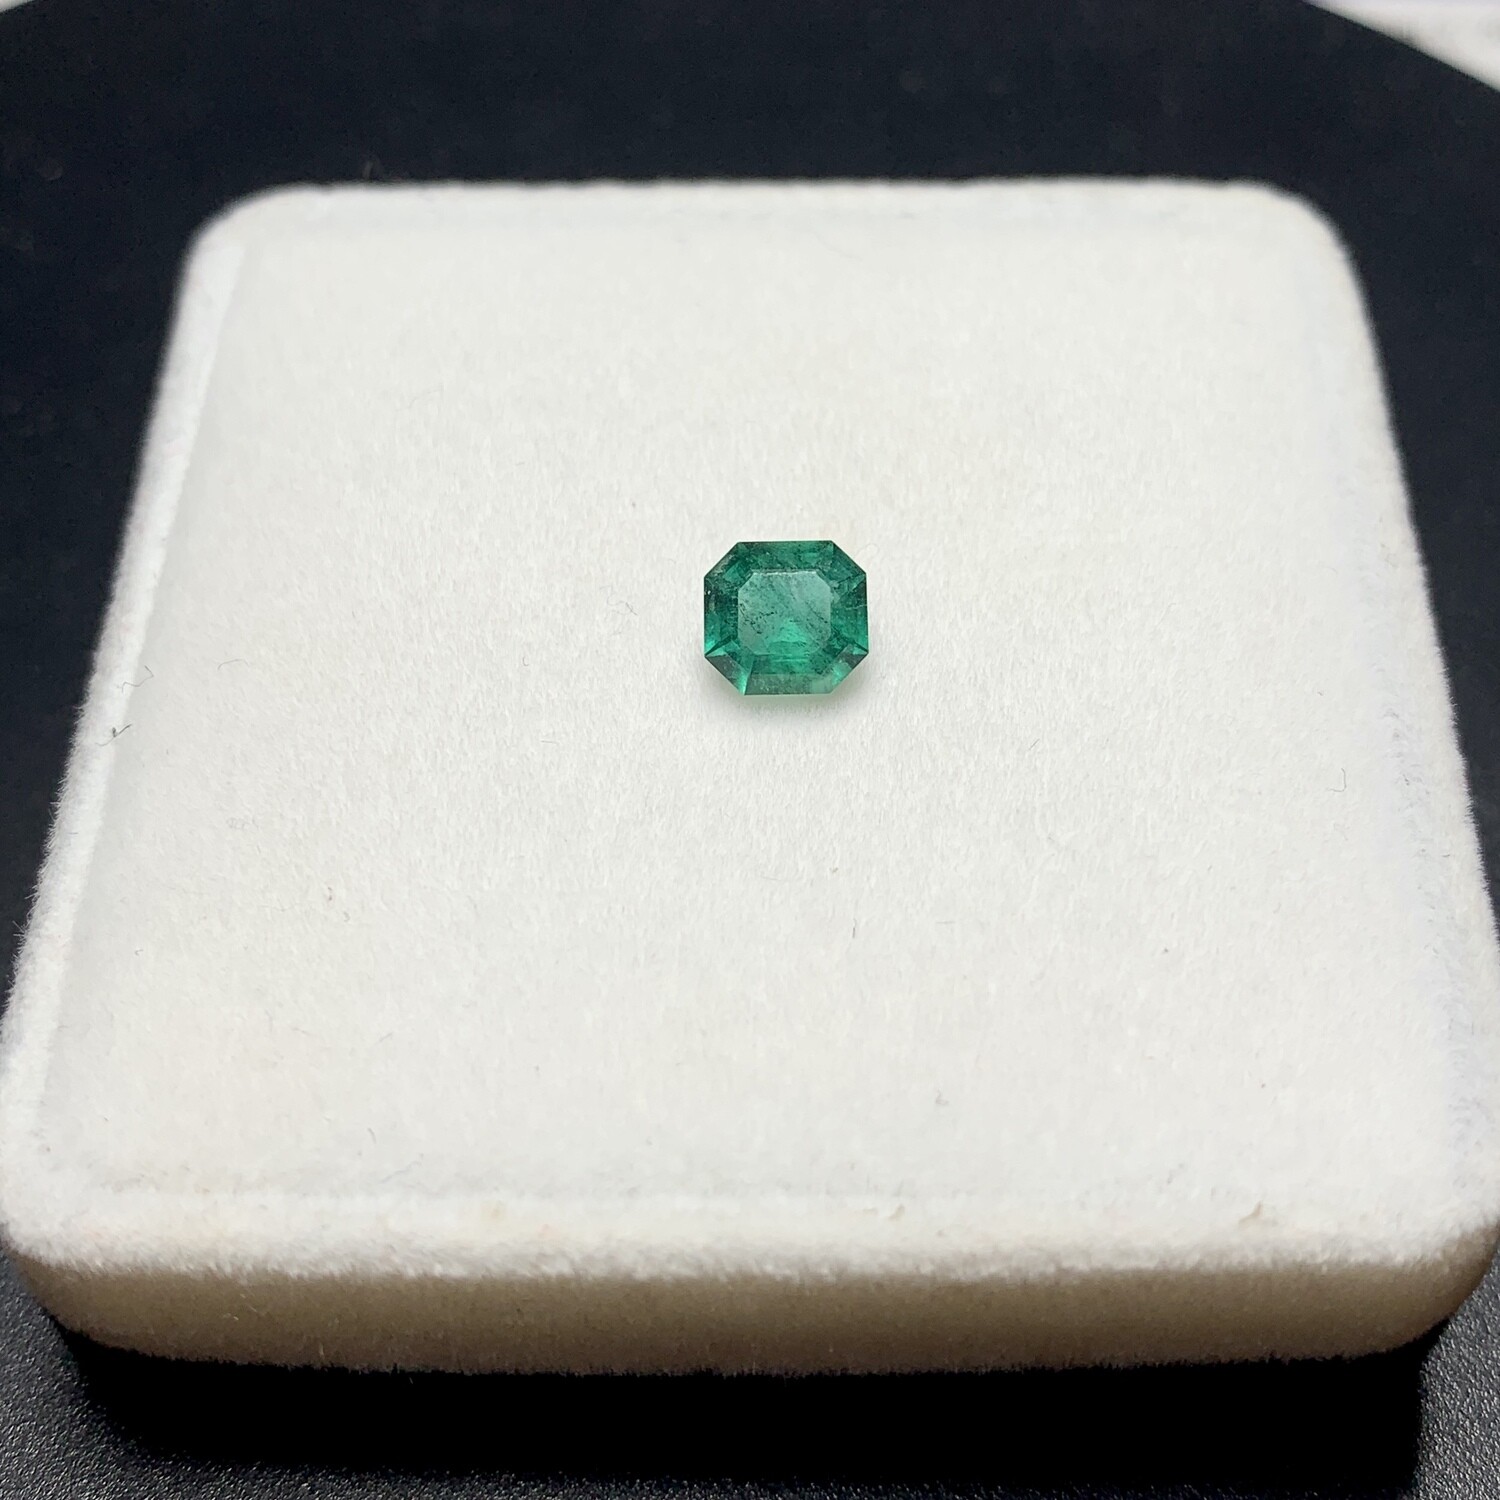 Sq.Emerald cut 0.74 ct